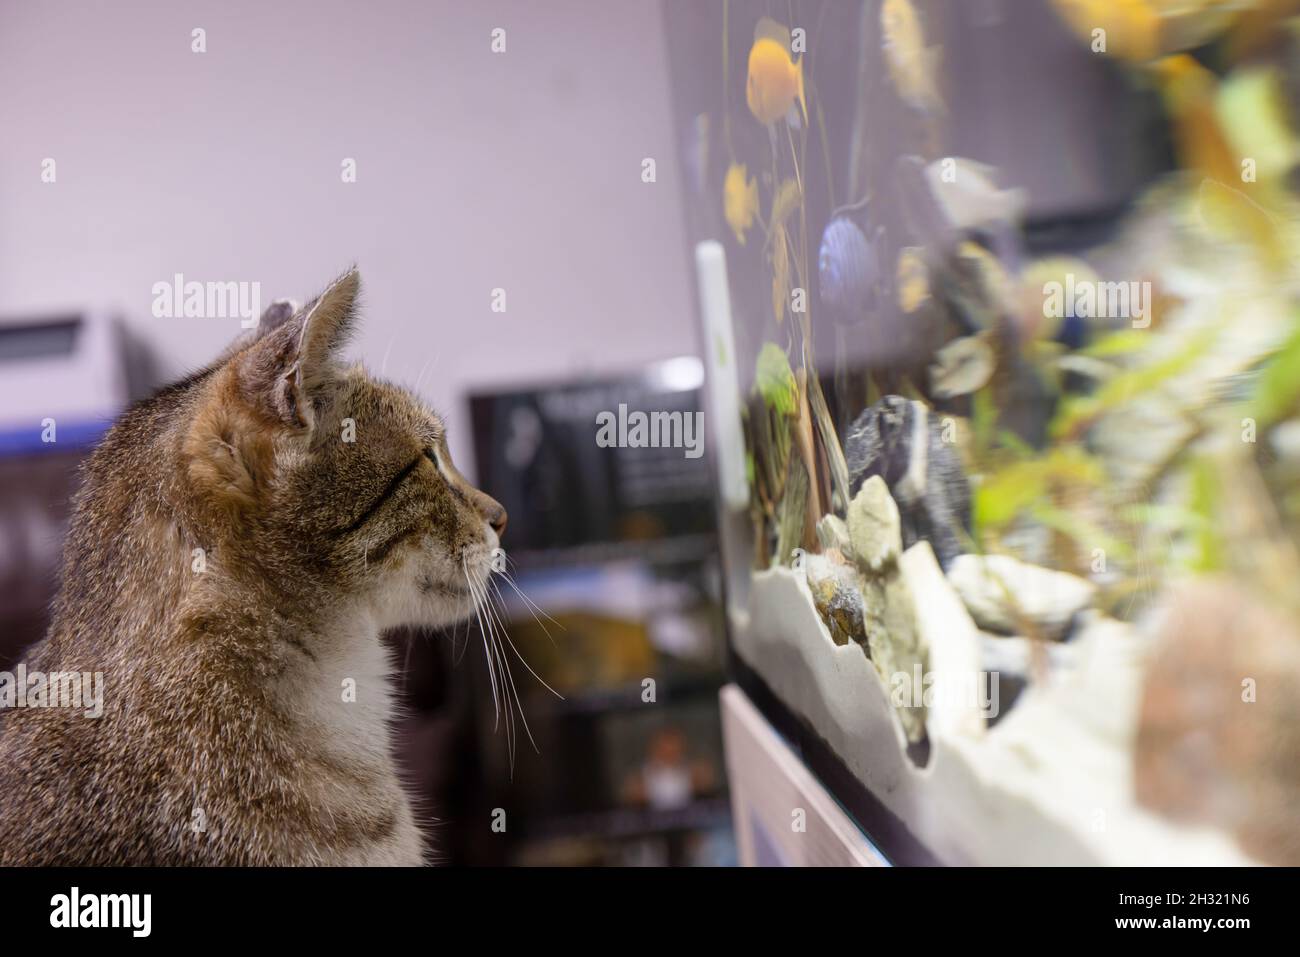 cat and fish, cat watching looking at aquarium fish. Stock Photo